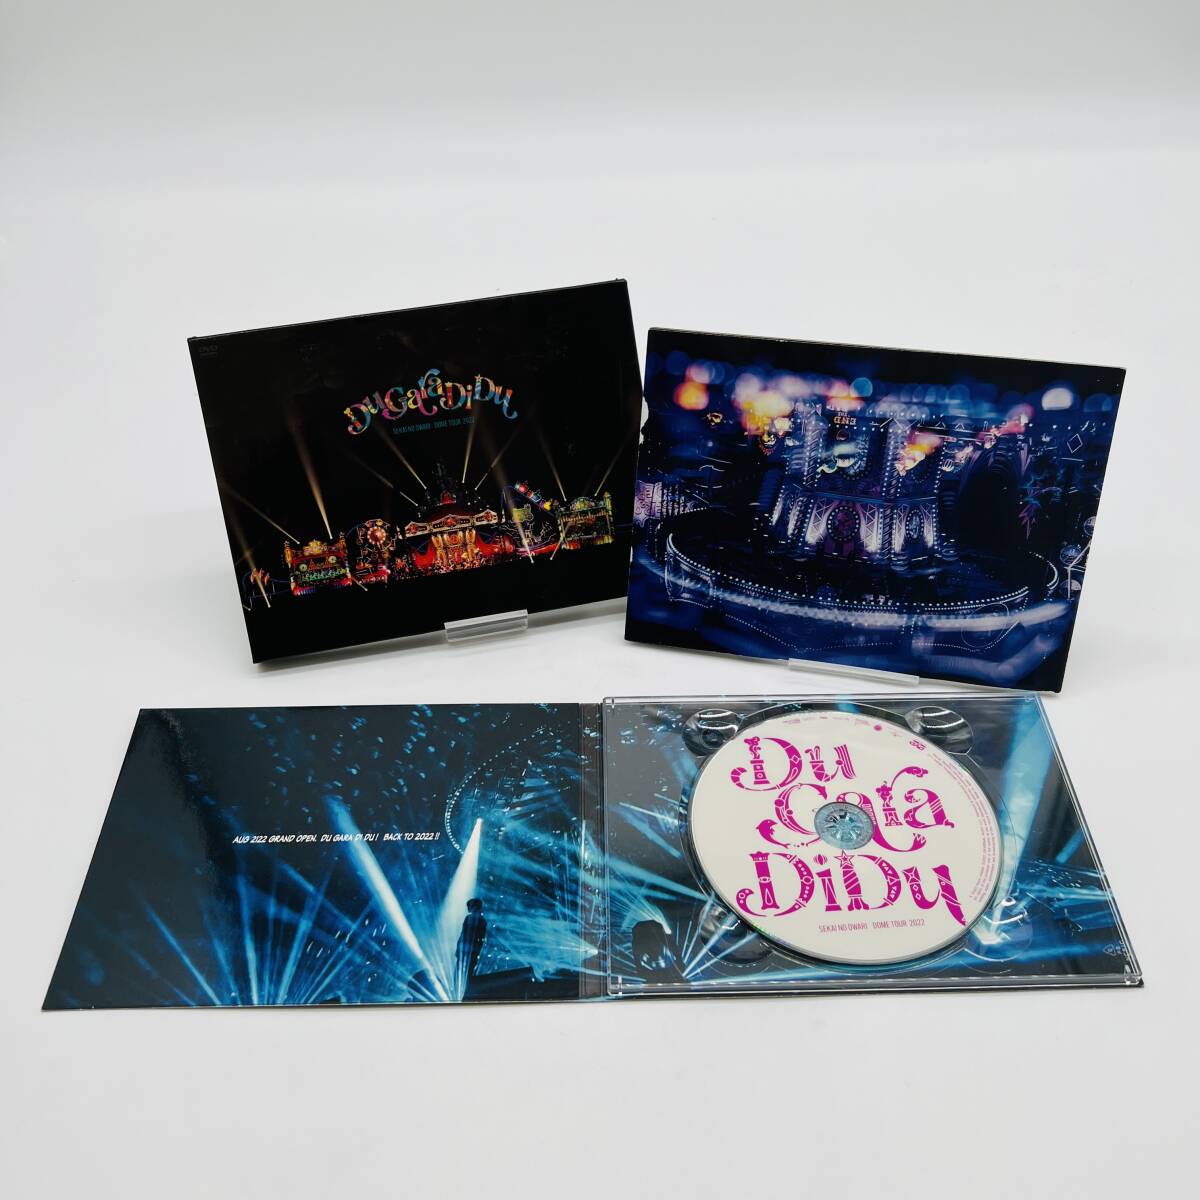 1 jpy ~ Du Gara Di Du general record DVD beautiful goods sekaowa